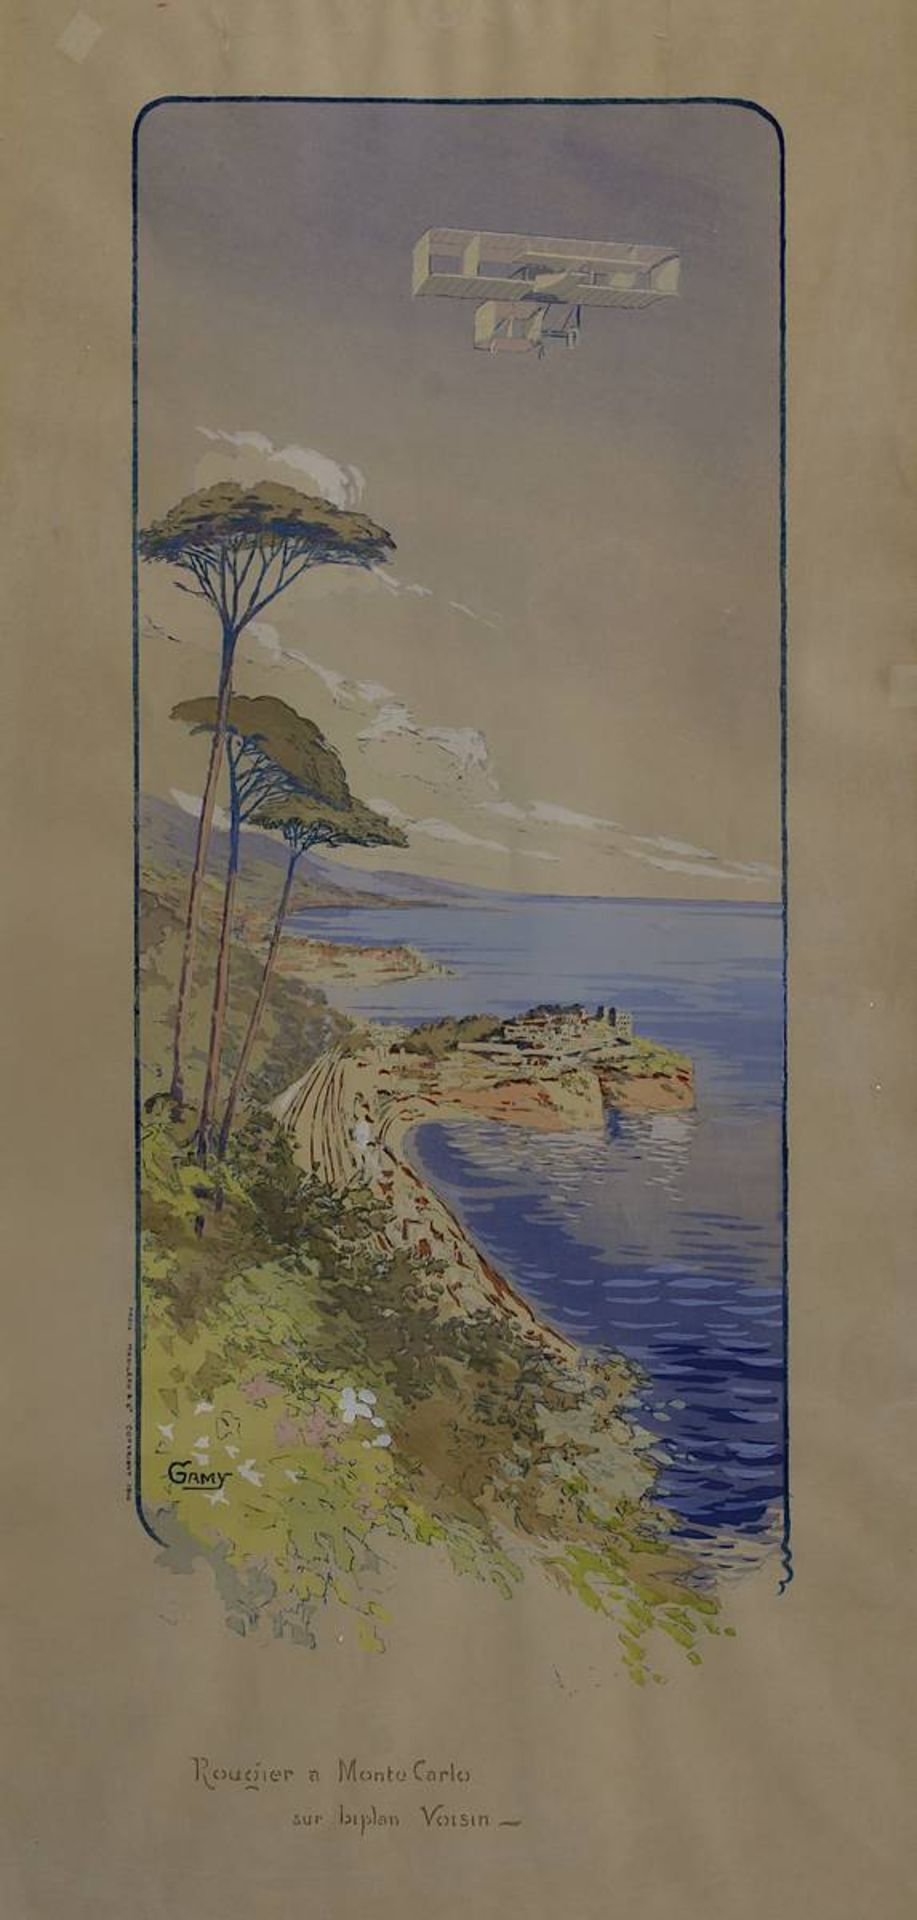 Gamy, Marguerite (1883 - 1936), "Rougier a Monte Carlo sur biplan Voisin", Farblithographie um 1910, - Image 2 of 2